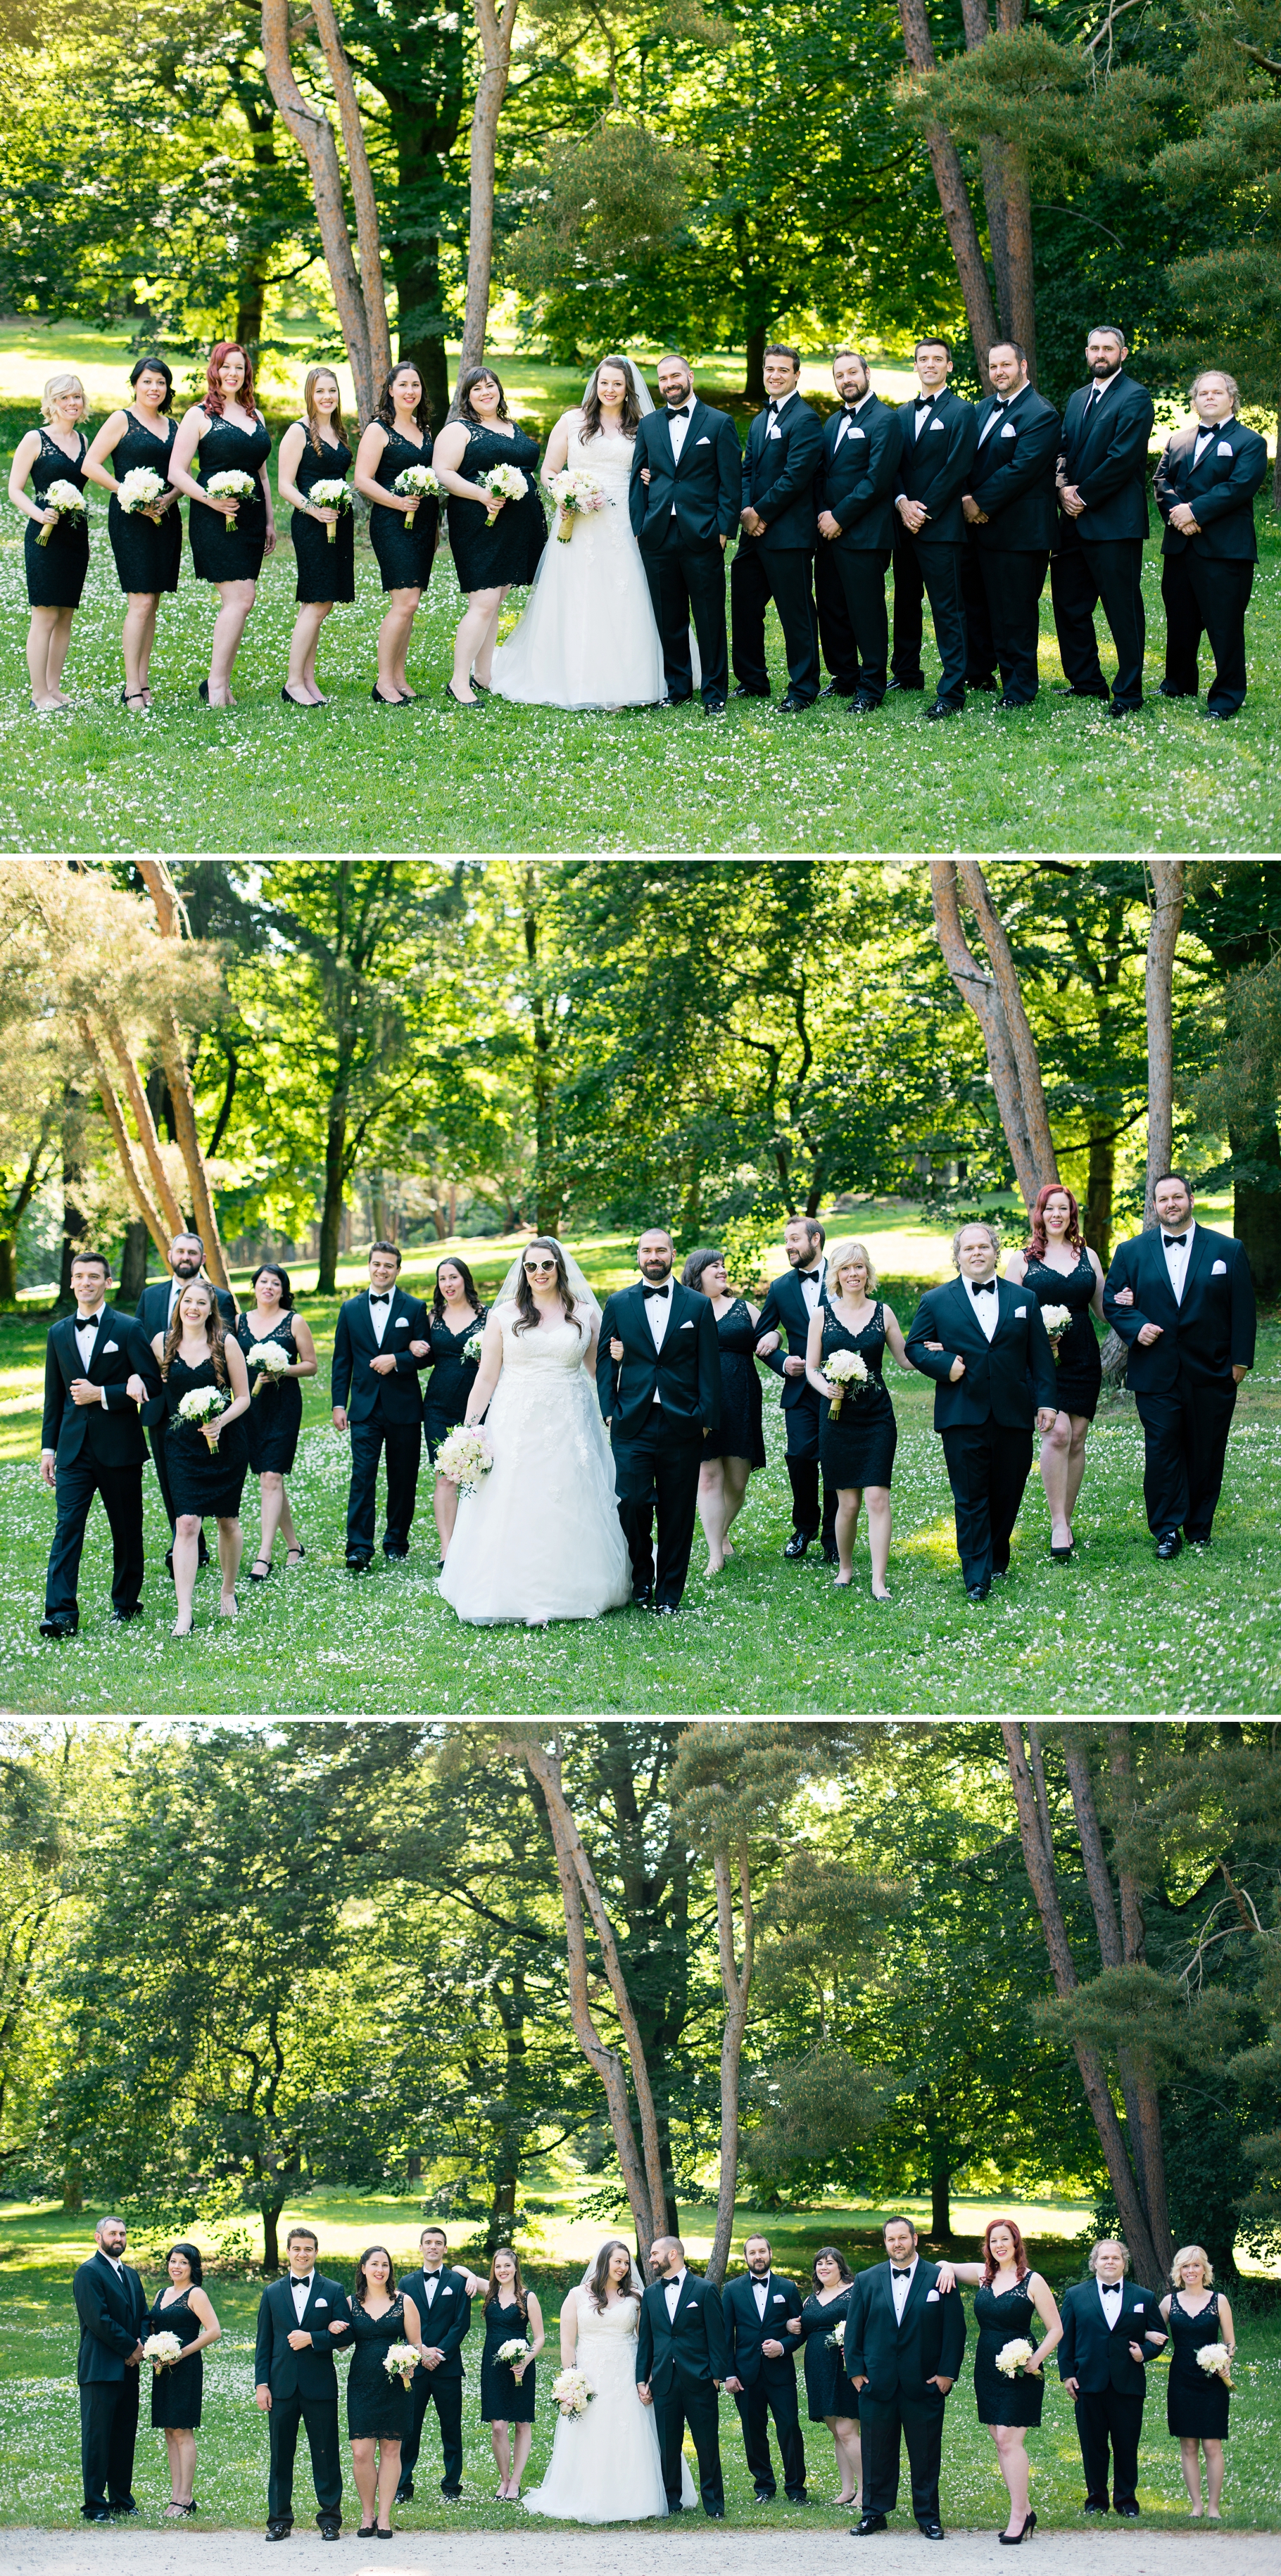 36-Wedding-Party-Portraits-Bridesmaids-Black-Dresses-Groomsmen-Classic-Suits-Woodland-Park-Seattle-Wedding-Photographer-Photography-by-Betty-Elaine